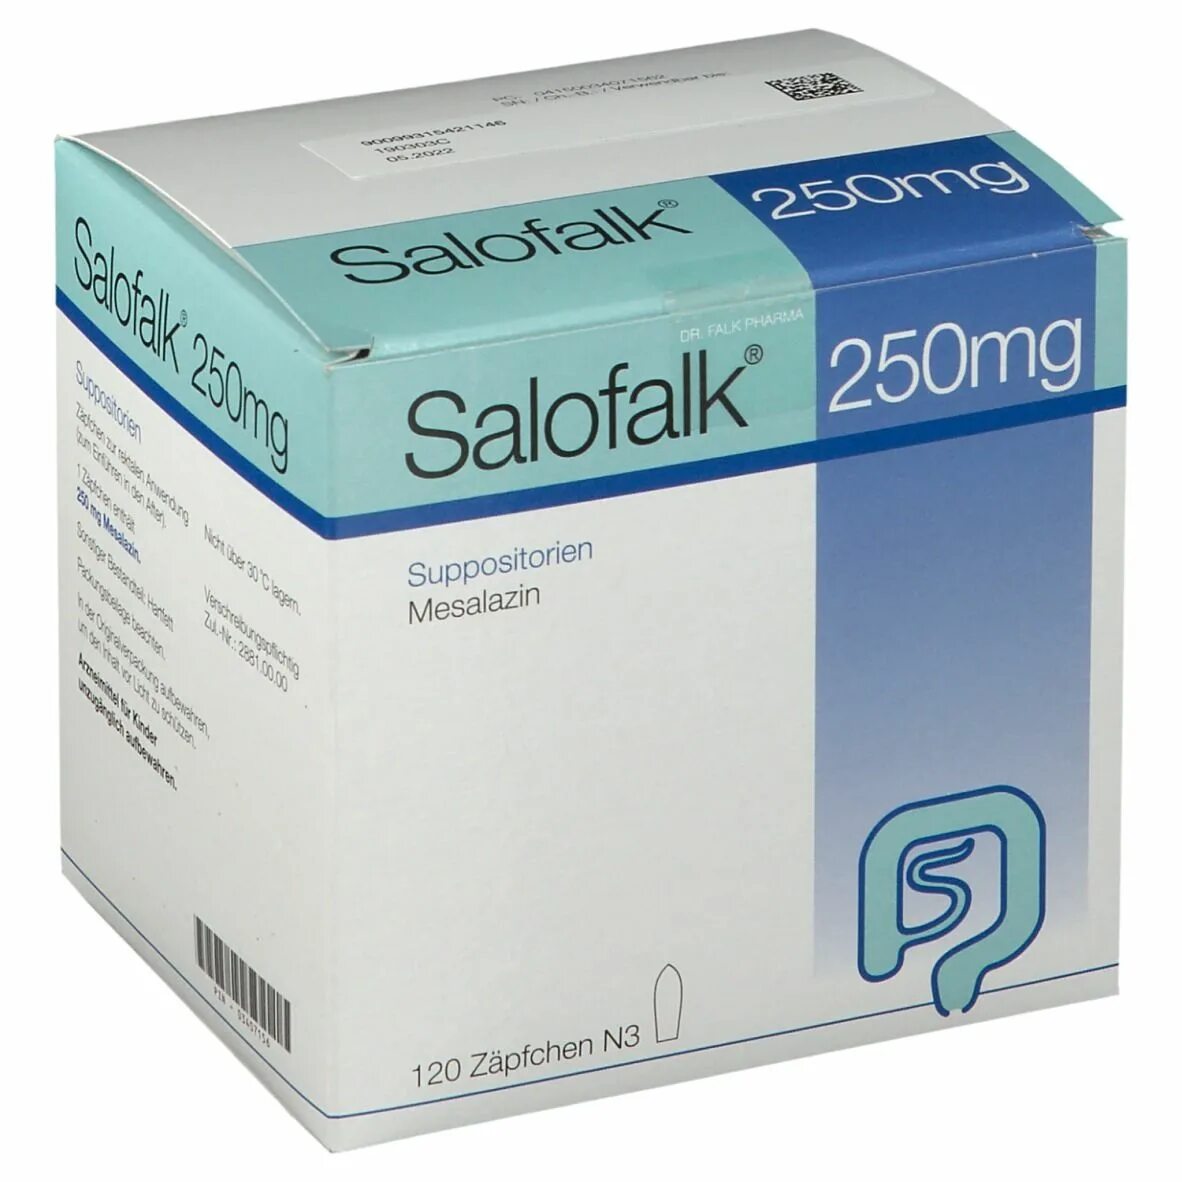 Salofalk 500 MG. Салофальк свечи 500 мг. Салофальк свечи 1000. Salofalk 1000 MG.